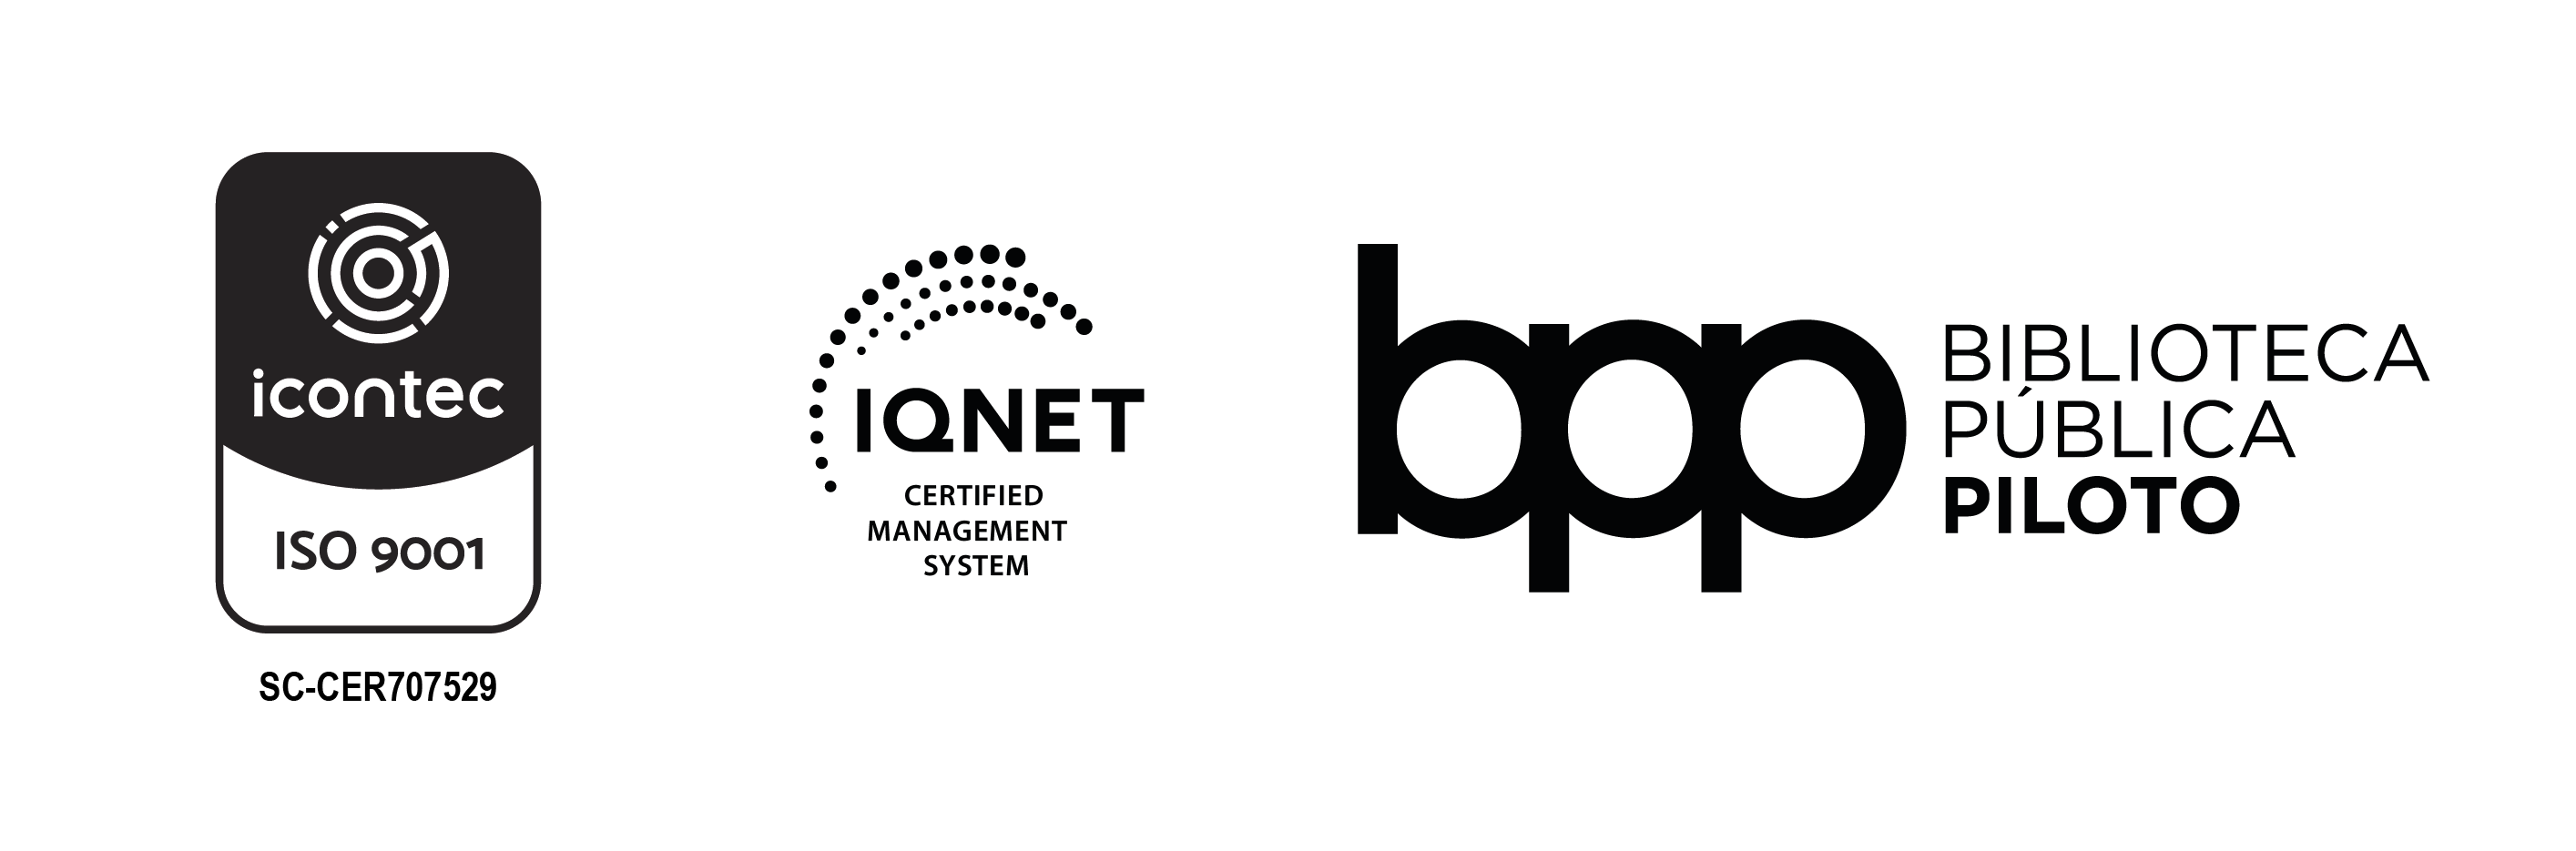 Logo web BPP icontec